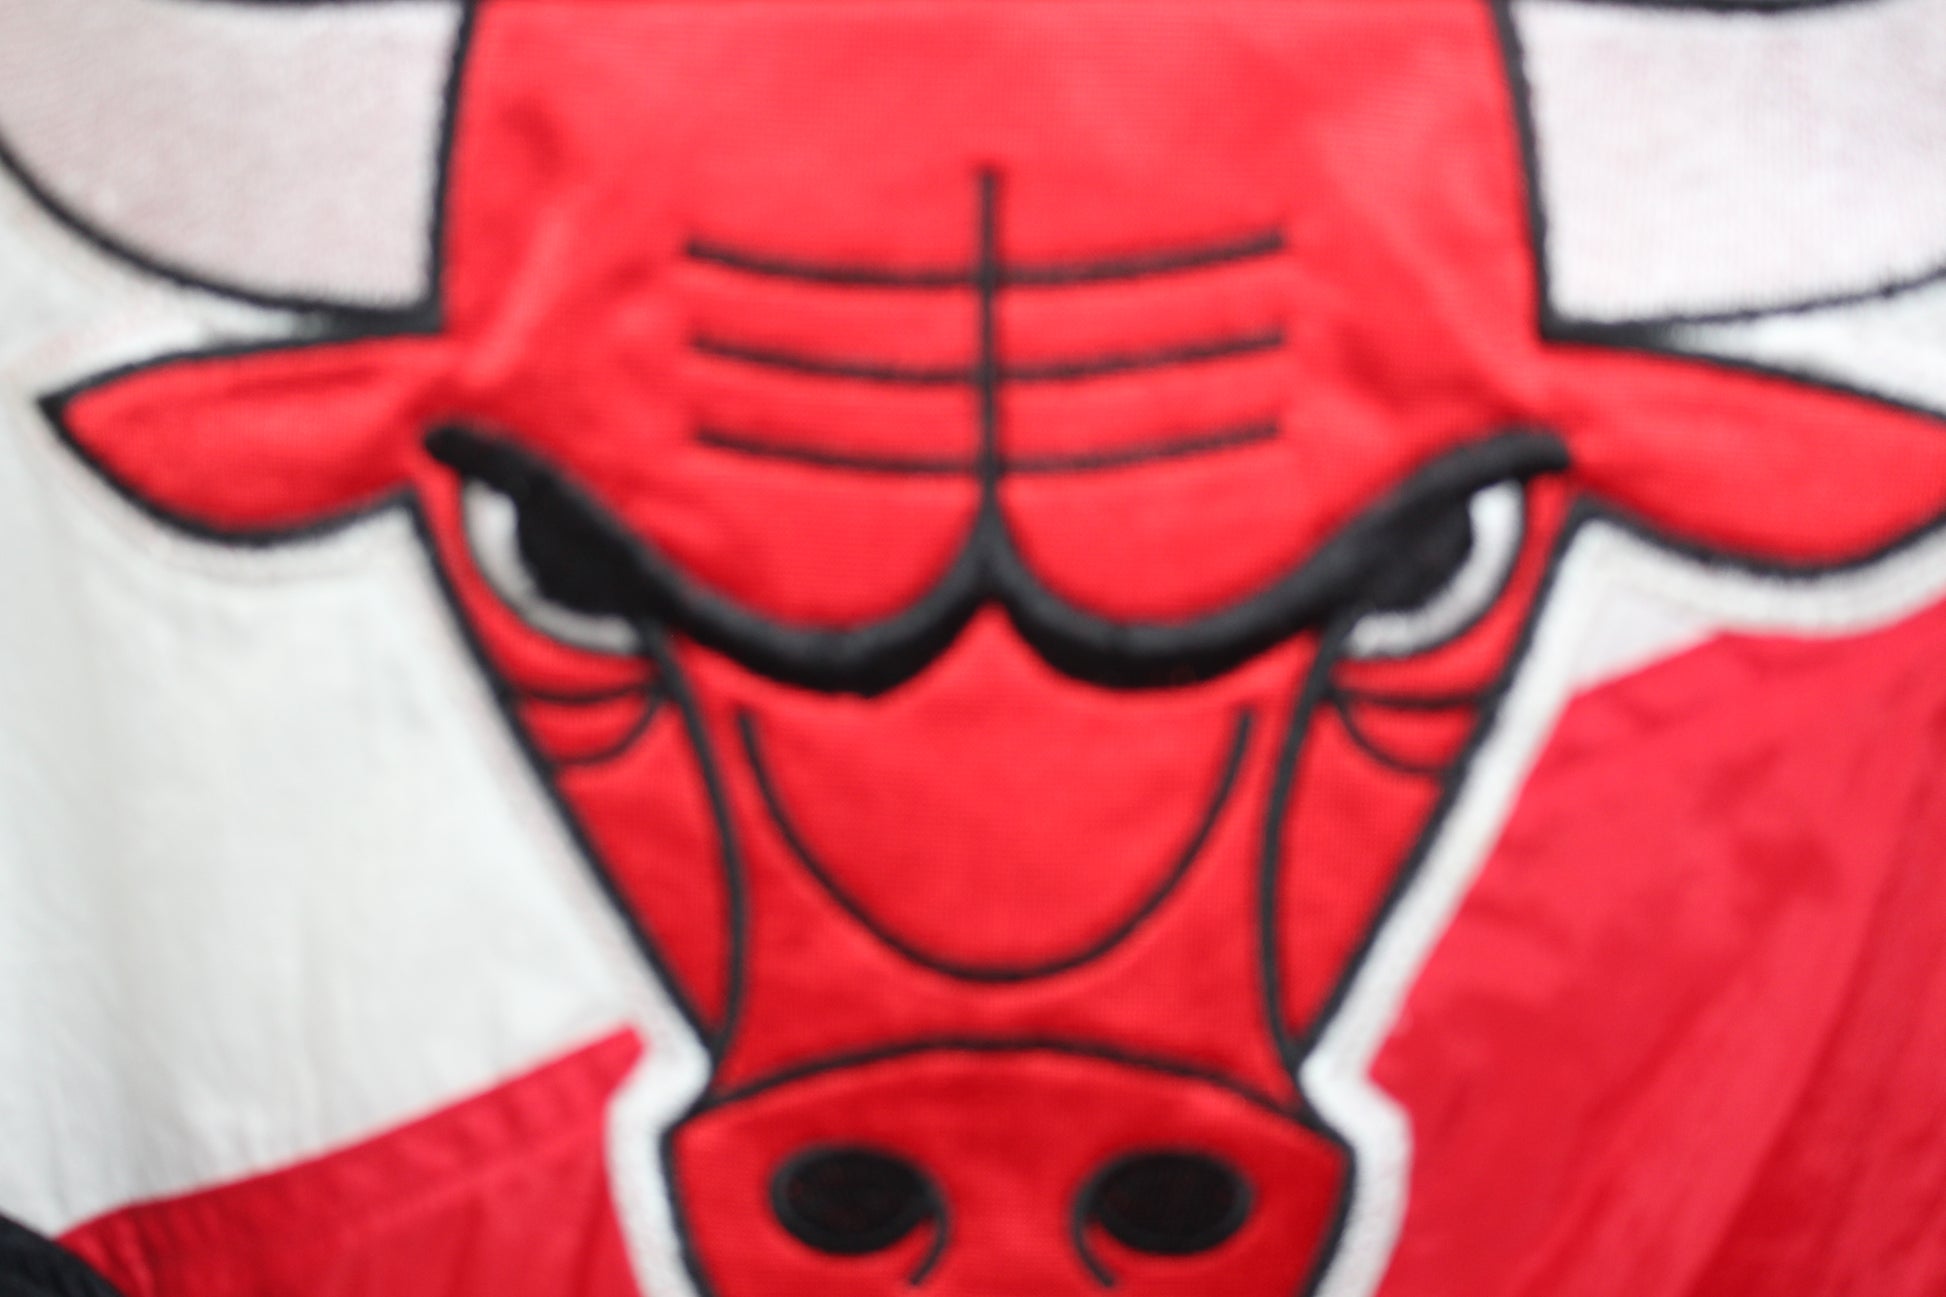 Chicago Bulls Apex One (XL) – Retro Windbreakers